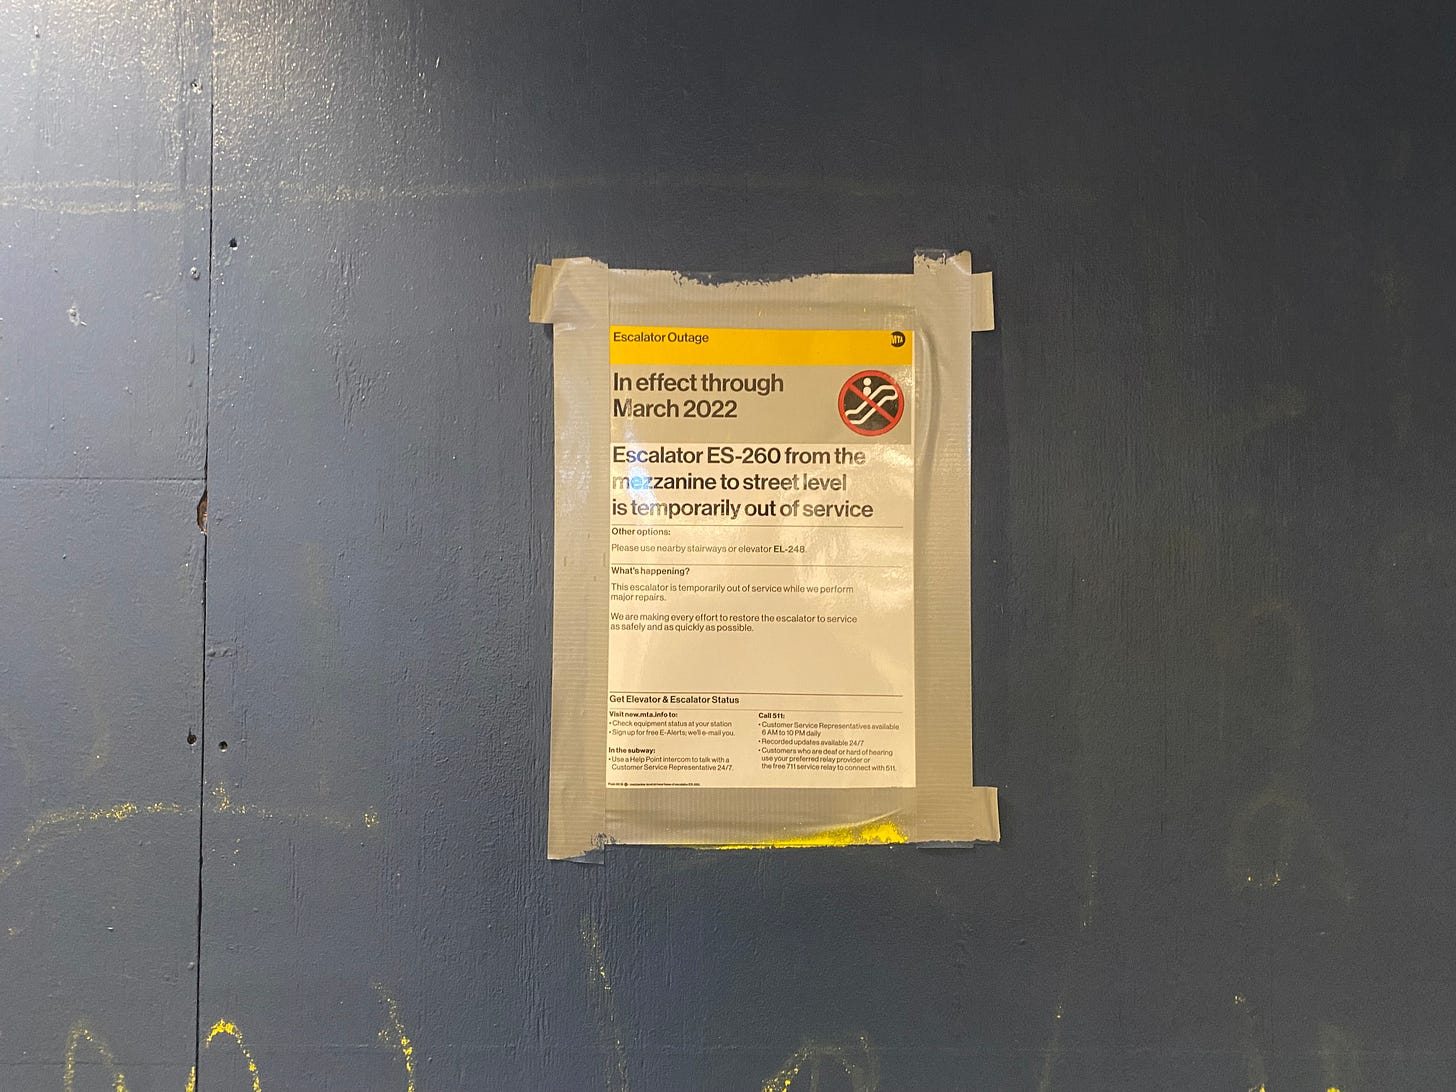 Escalator closure sign in the subway